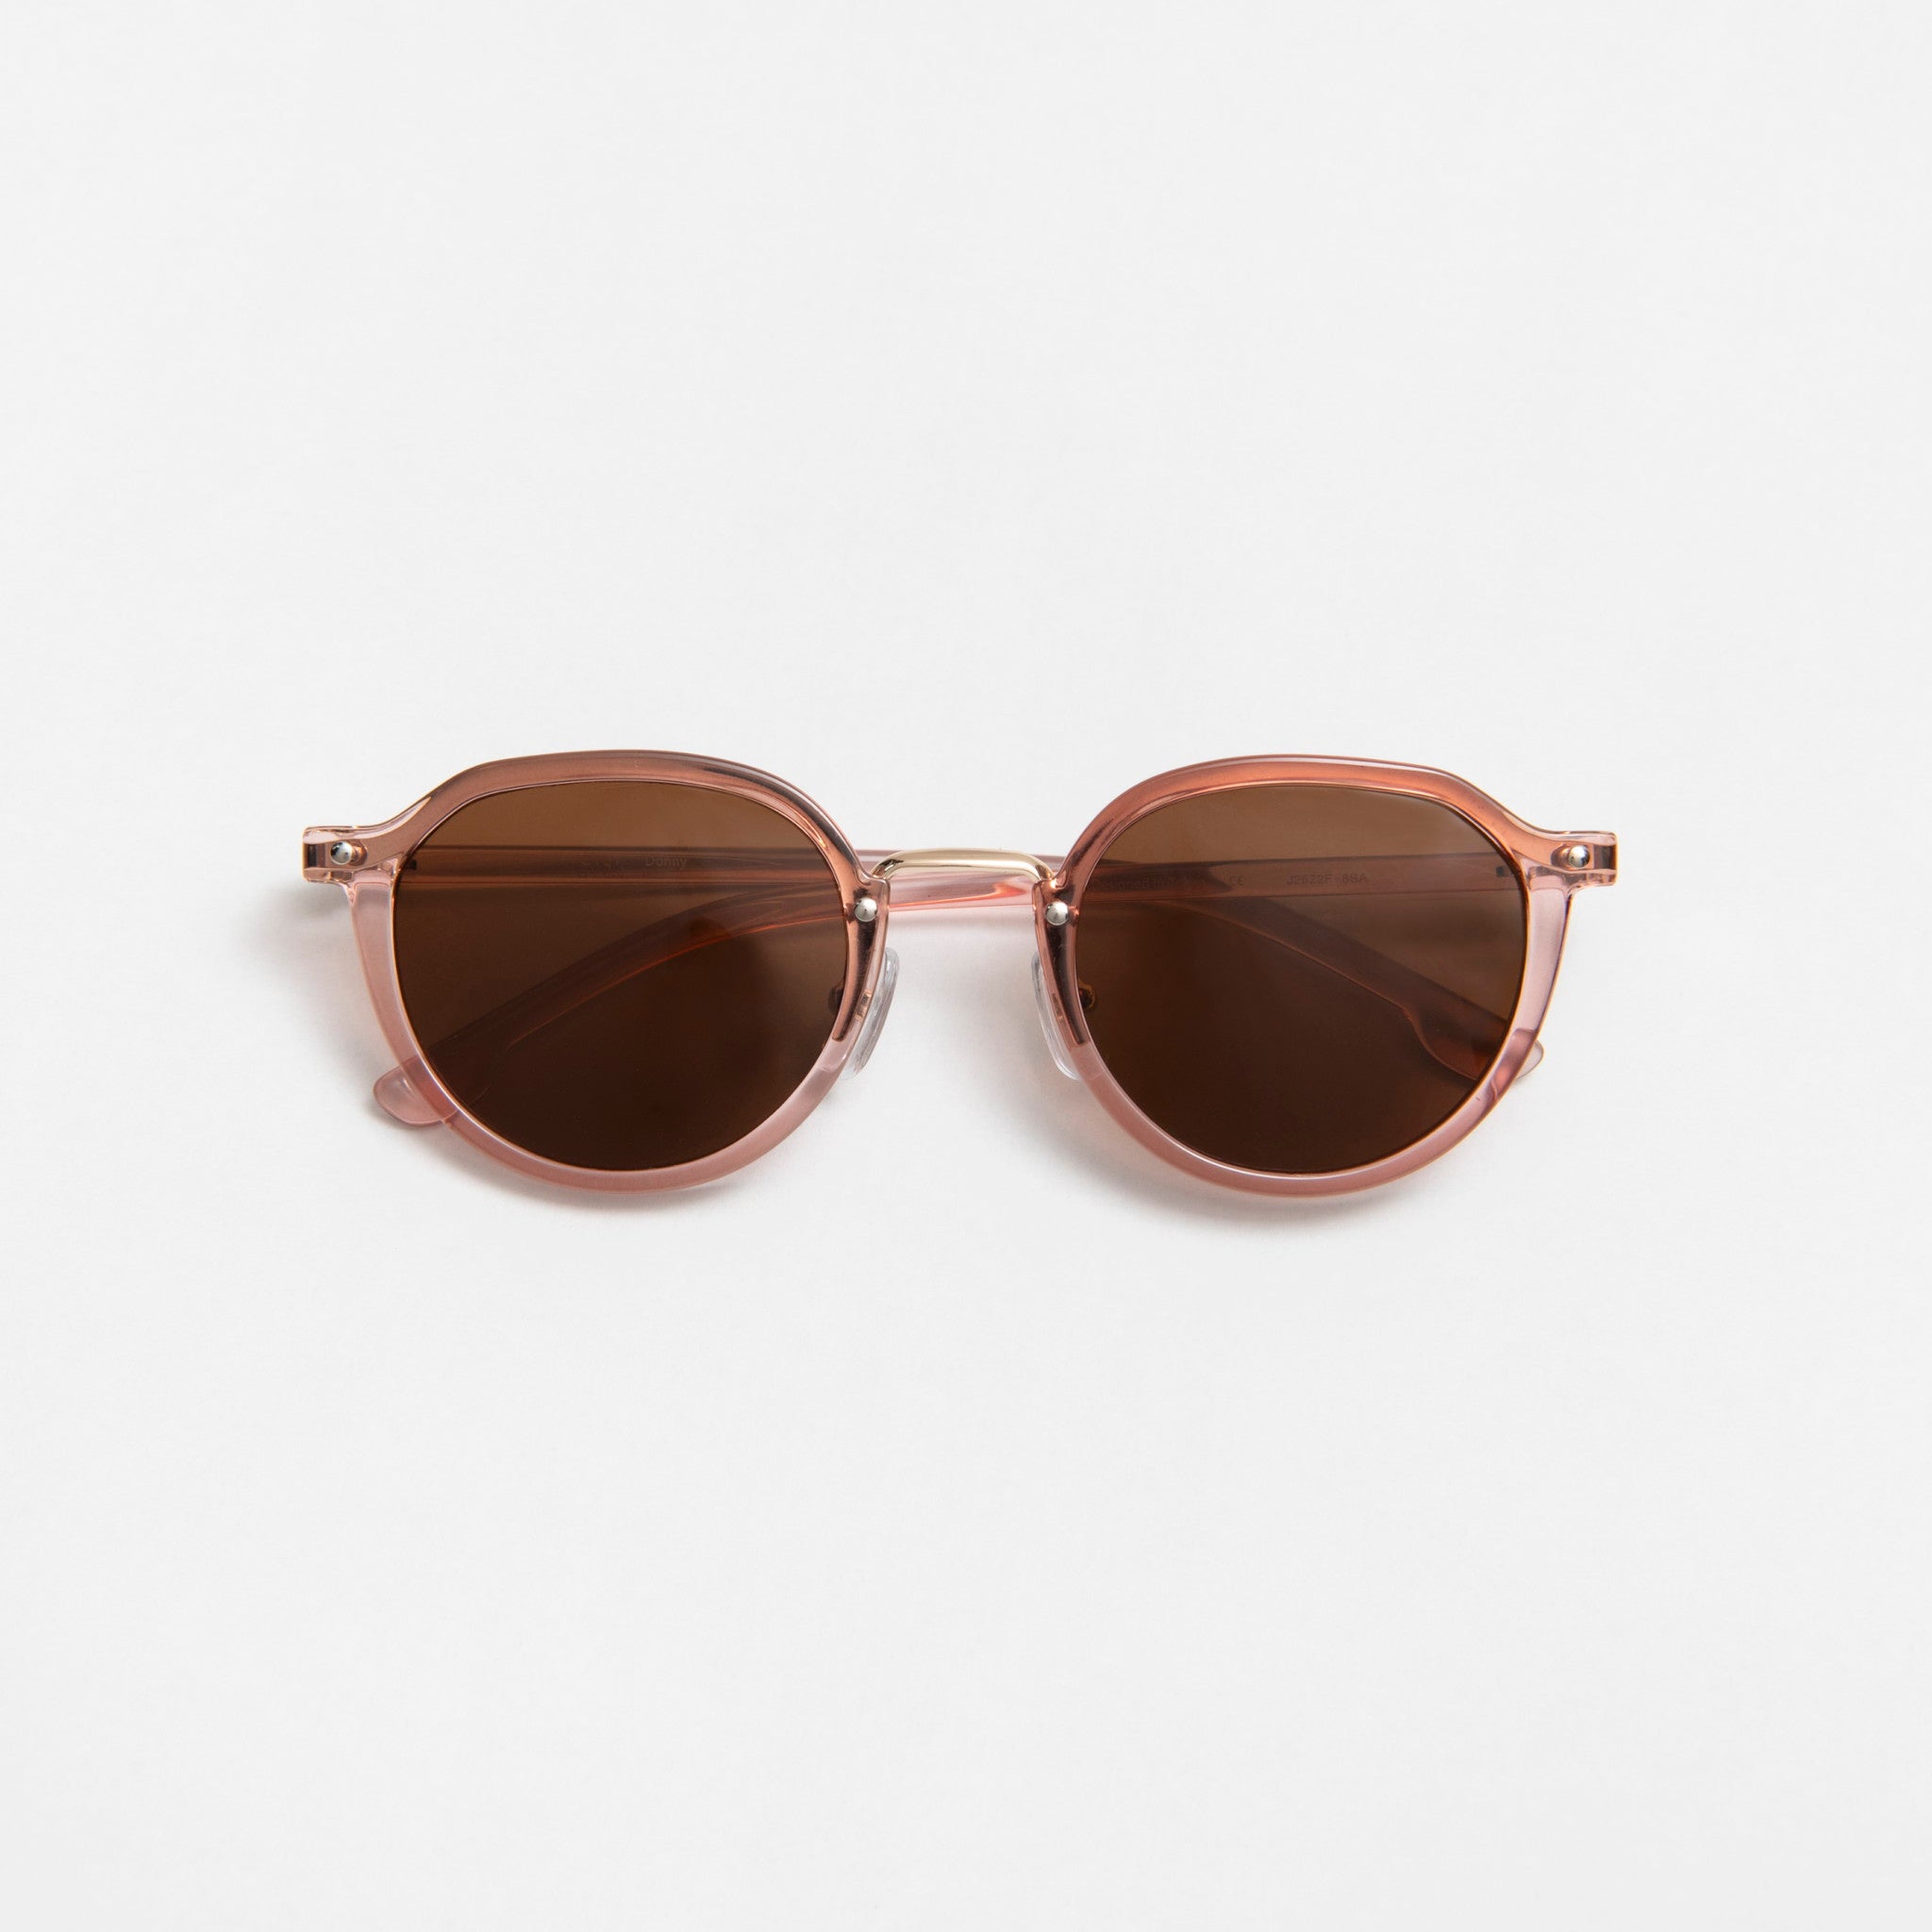 【Ciqi】DONNY サングラス Rose Brown Lens sunglasses(ダニー ロゼ ブラウンレンズ)